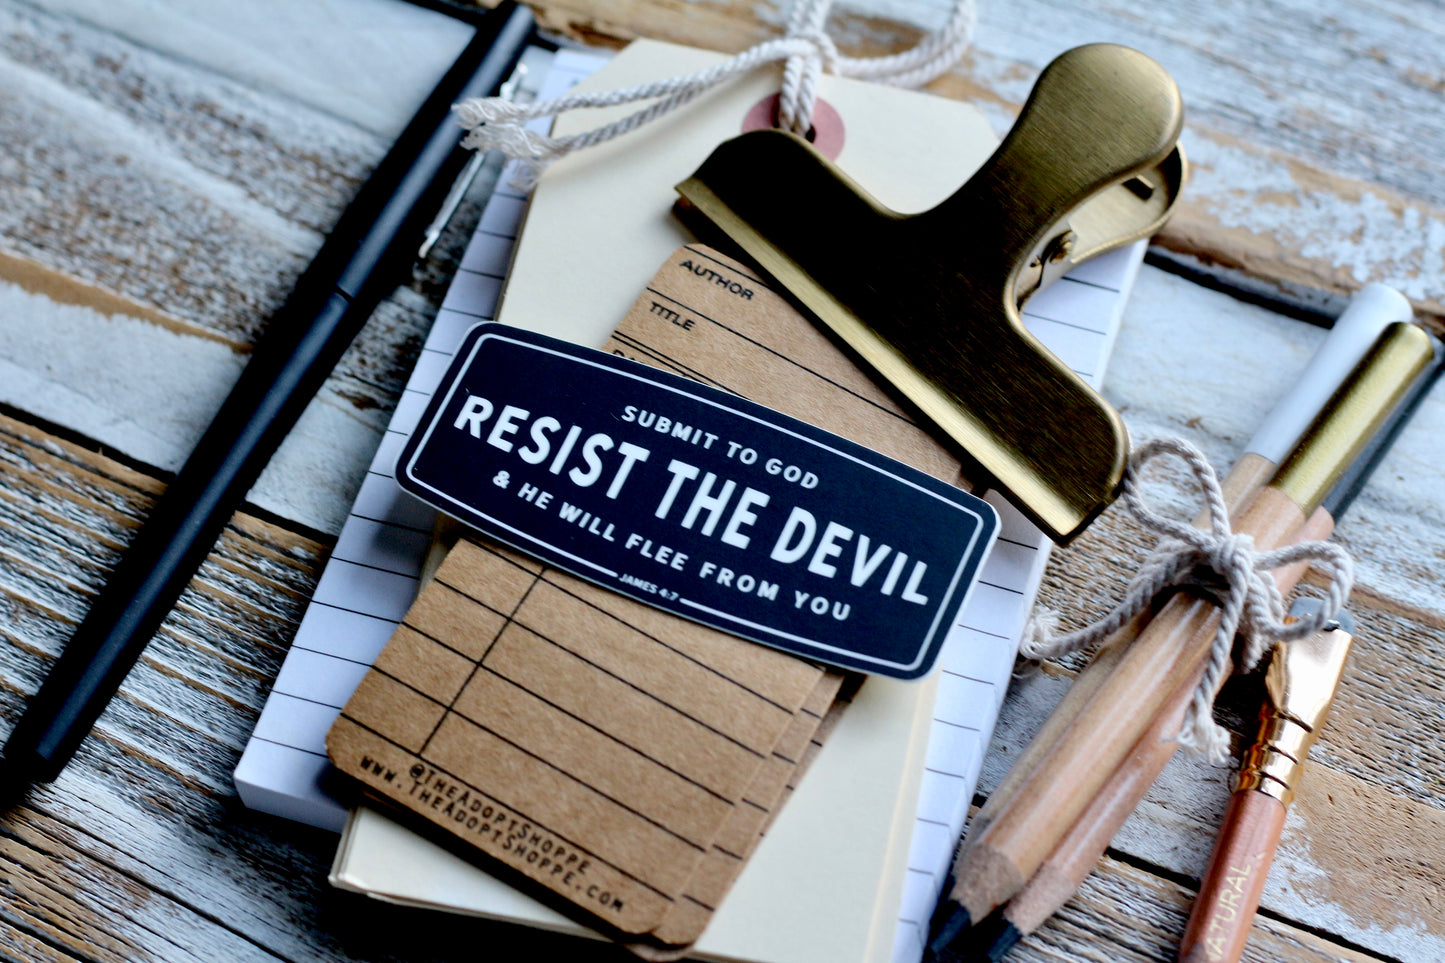 resist the devil & he will flee from you (James 4:7) waterproof vinyl sticker decal